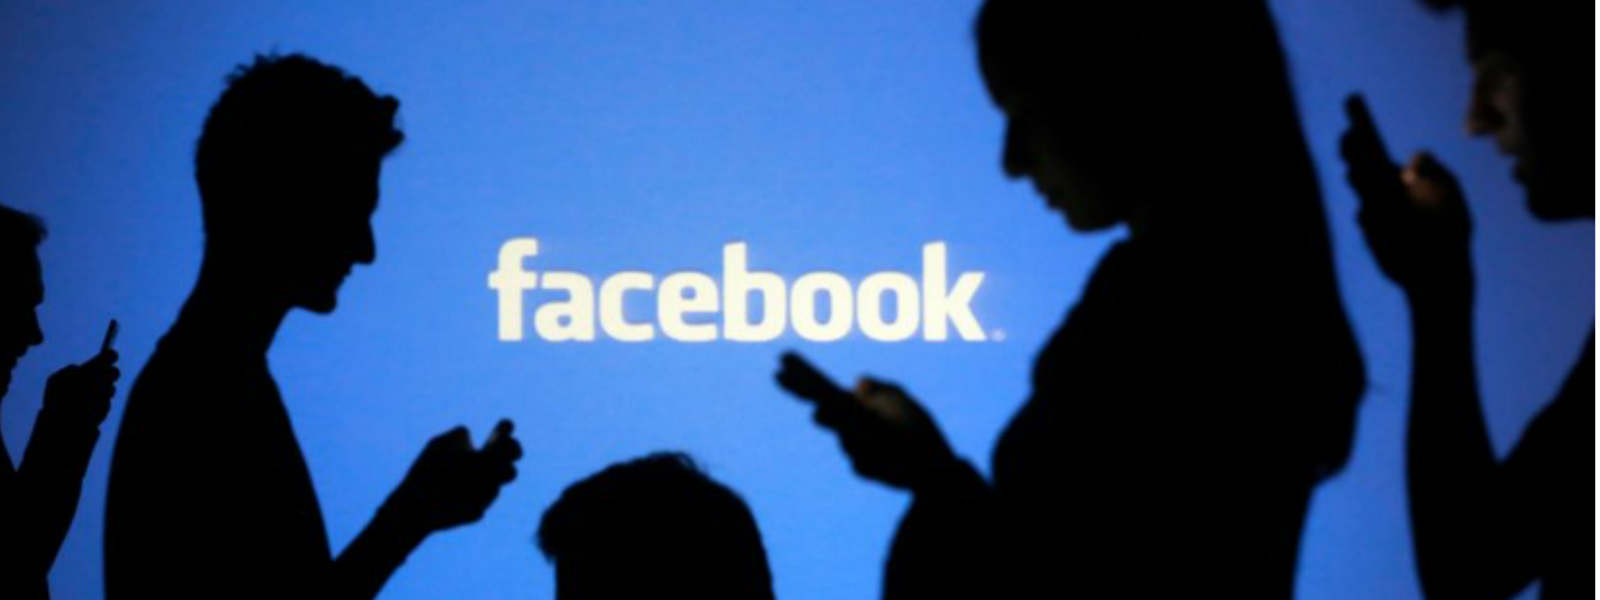 Facebook loses $58 billion in value